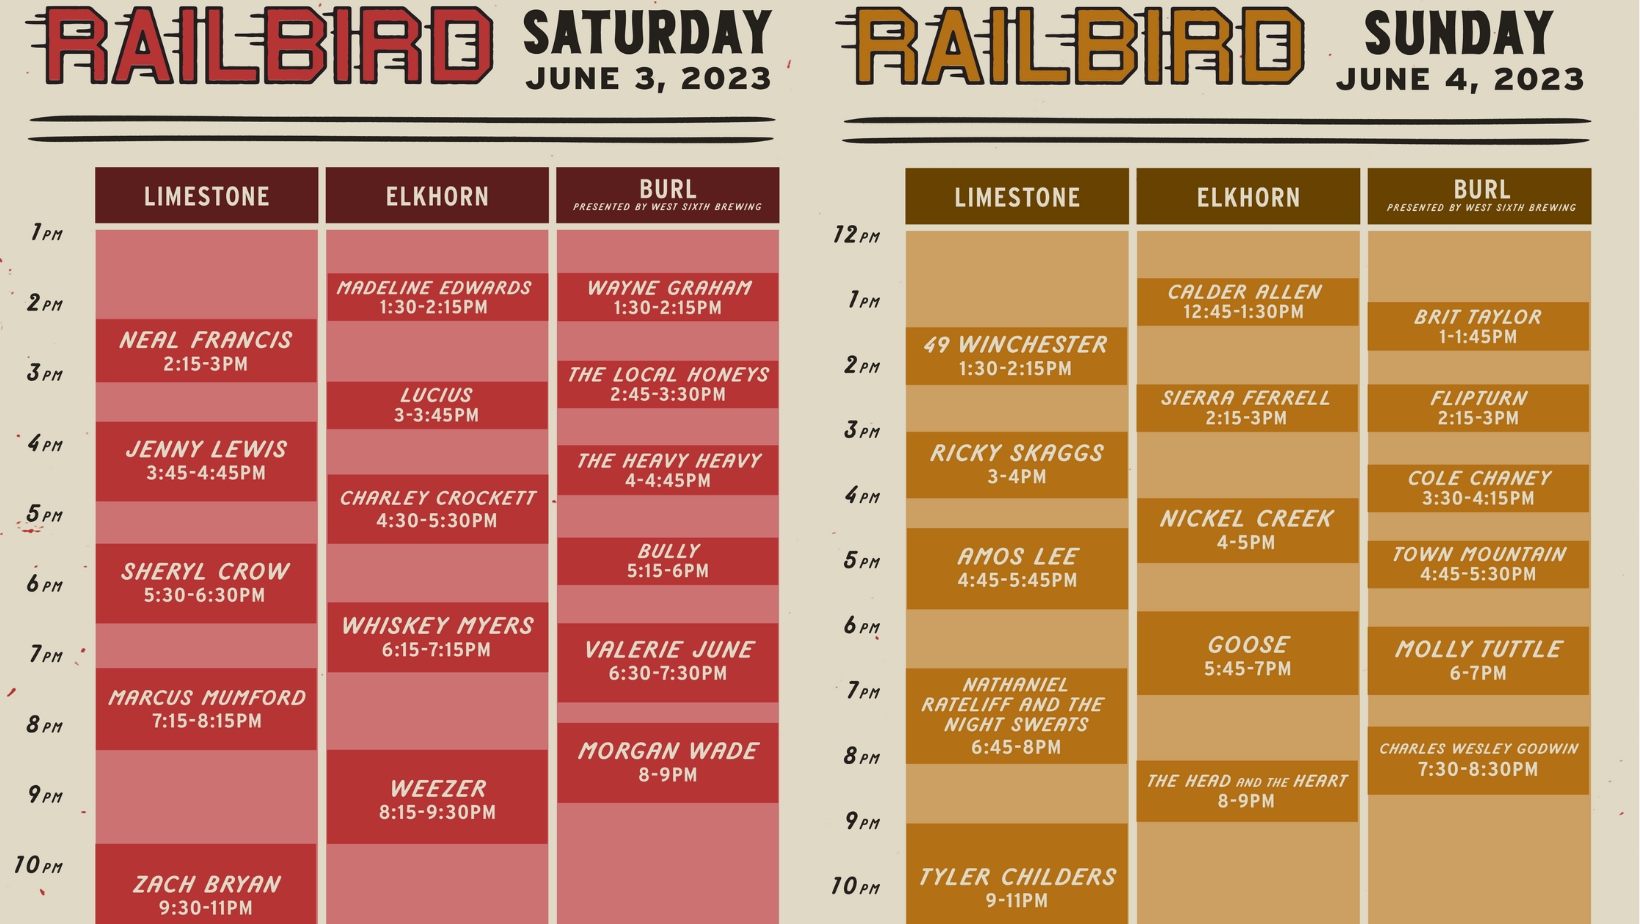 Railbird releases 2day festival lineup schedule